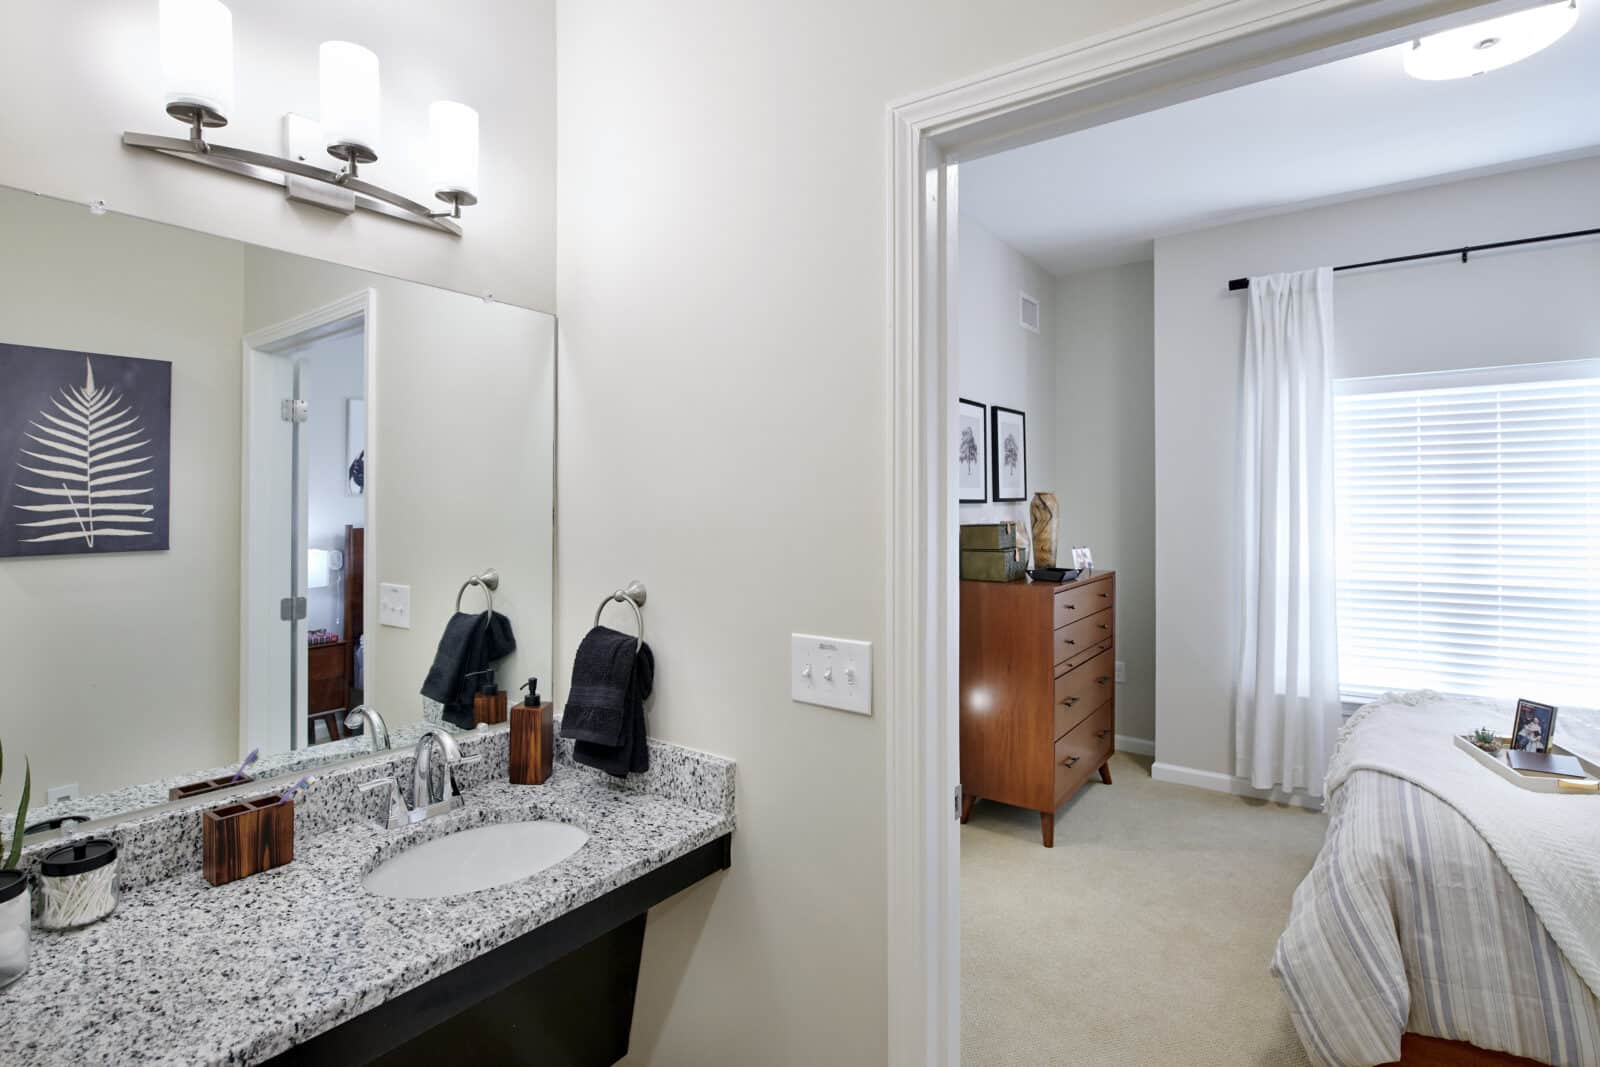 bathroom vanity with sink and hand towels; adjacent bedroom